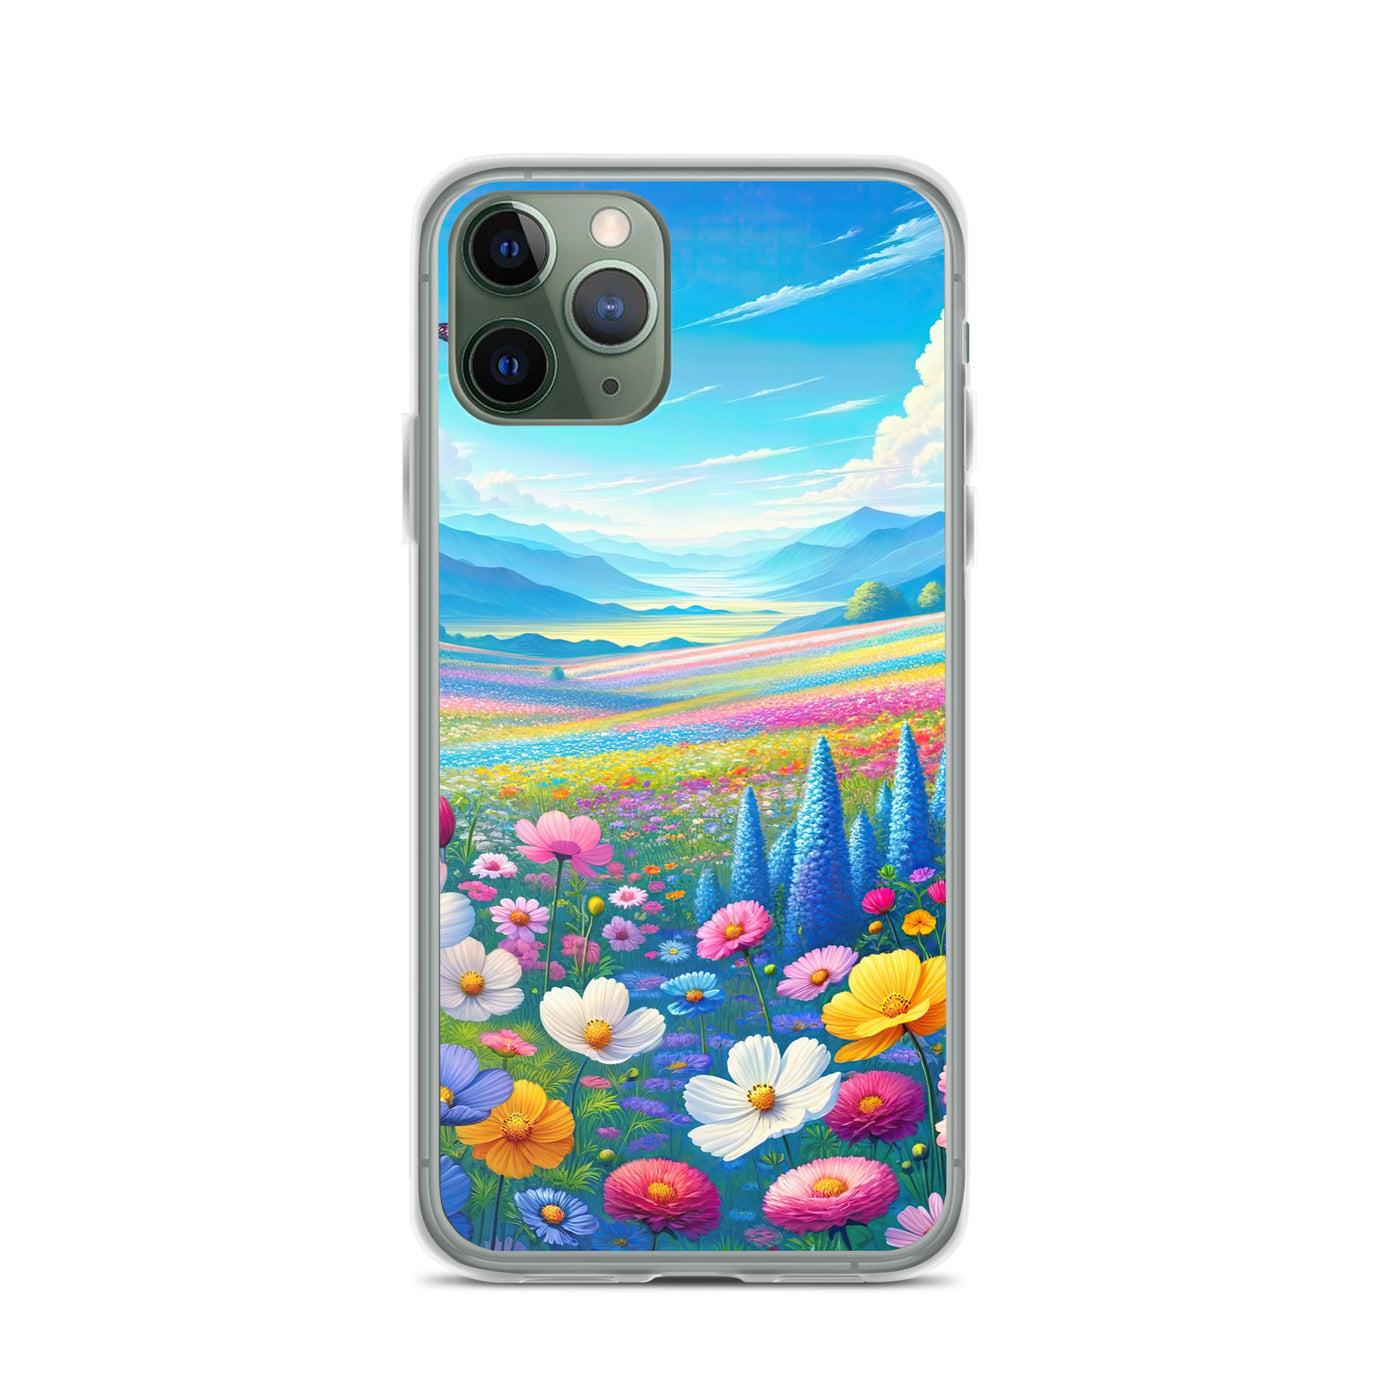 Weitläufiges Blumenfeld unter himmelblauem Himmel, leuchtende Flora - iPhone Schutzhülle (durchsichtig) camping xxx yyy zzz iPhone 11 Pro